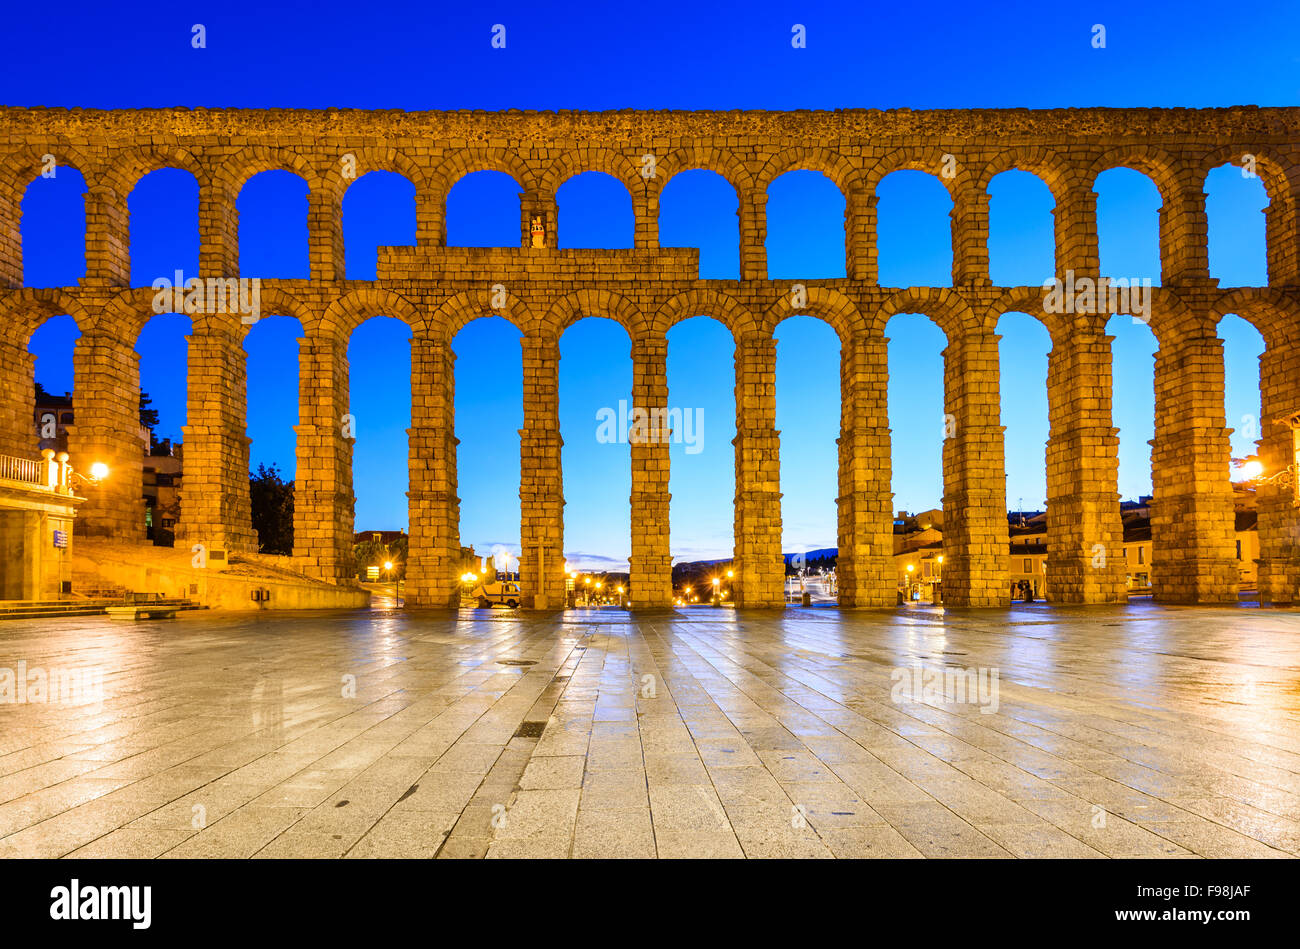 Segovia, Espagne. Plaza del Azoguejo et l'ancien aqueduc romain, à partir du 1er siècle de l'Empire romain. Banque D'Images